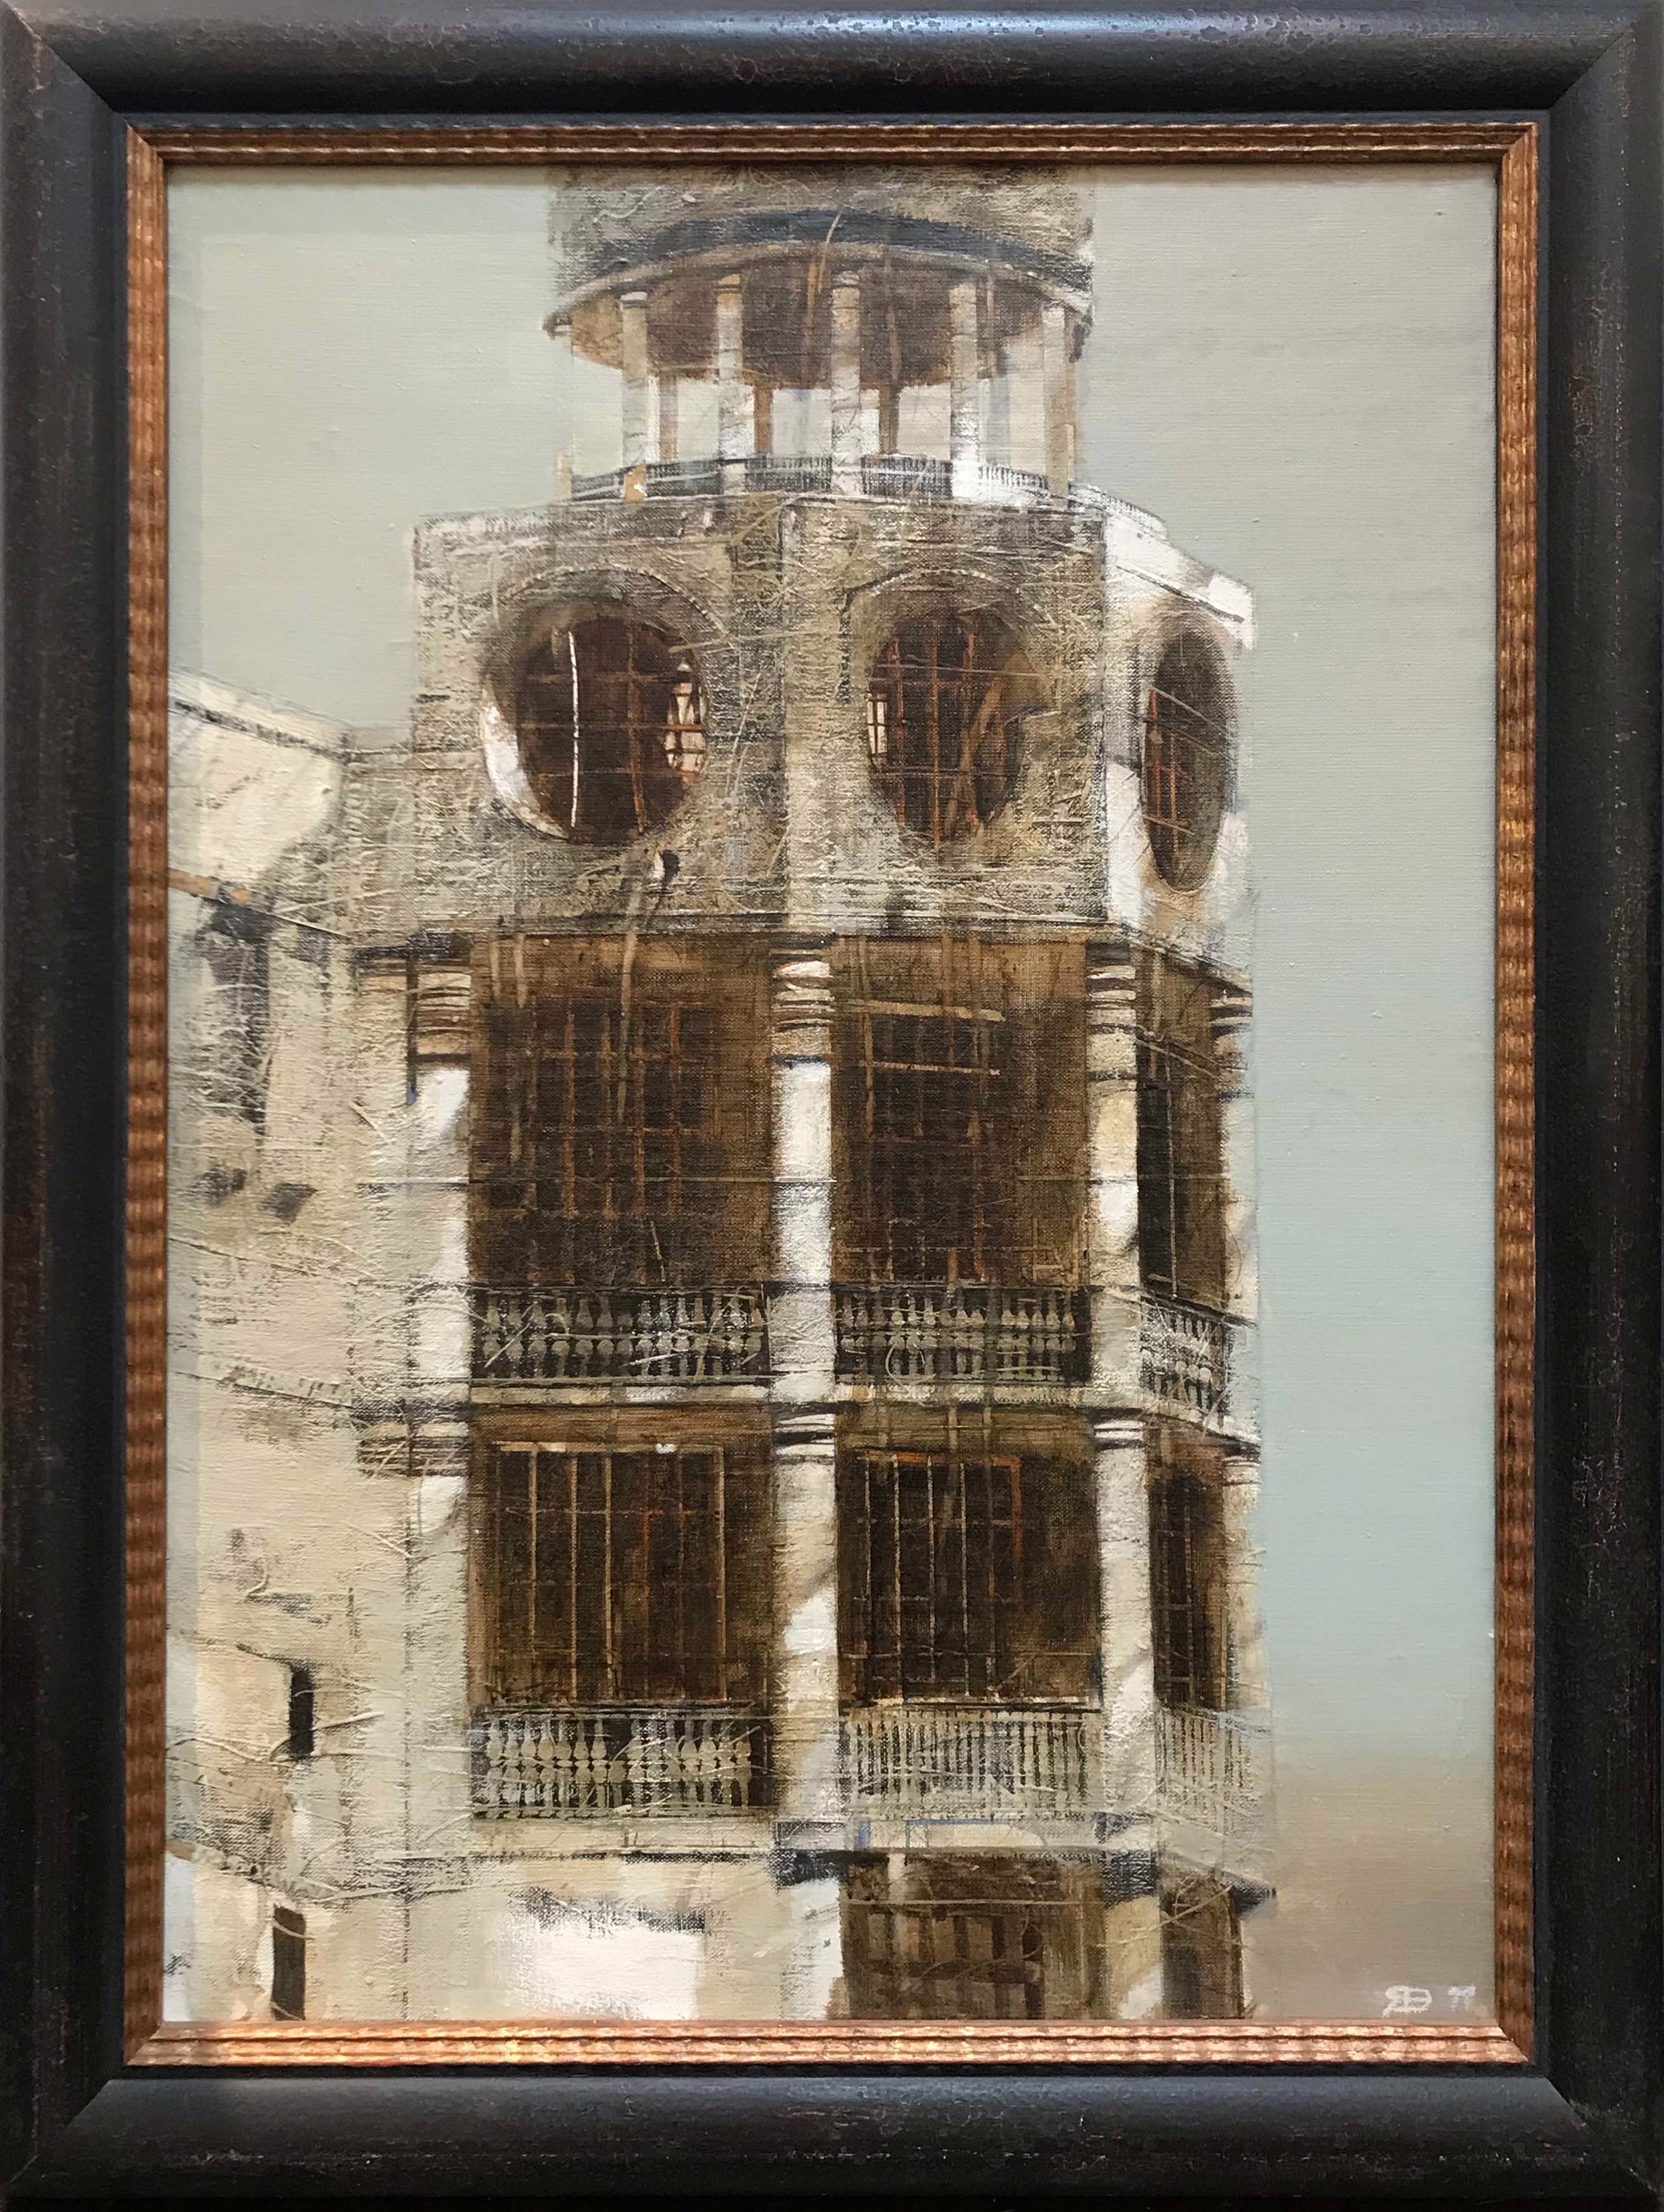 Tower No. 6 by Edvard Yashin